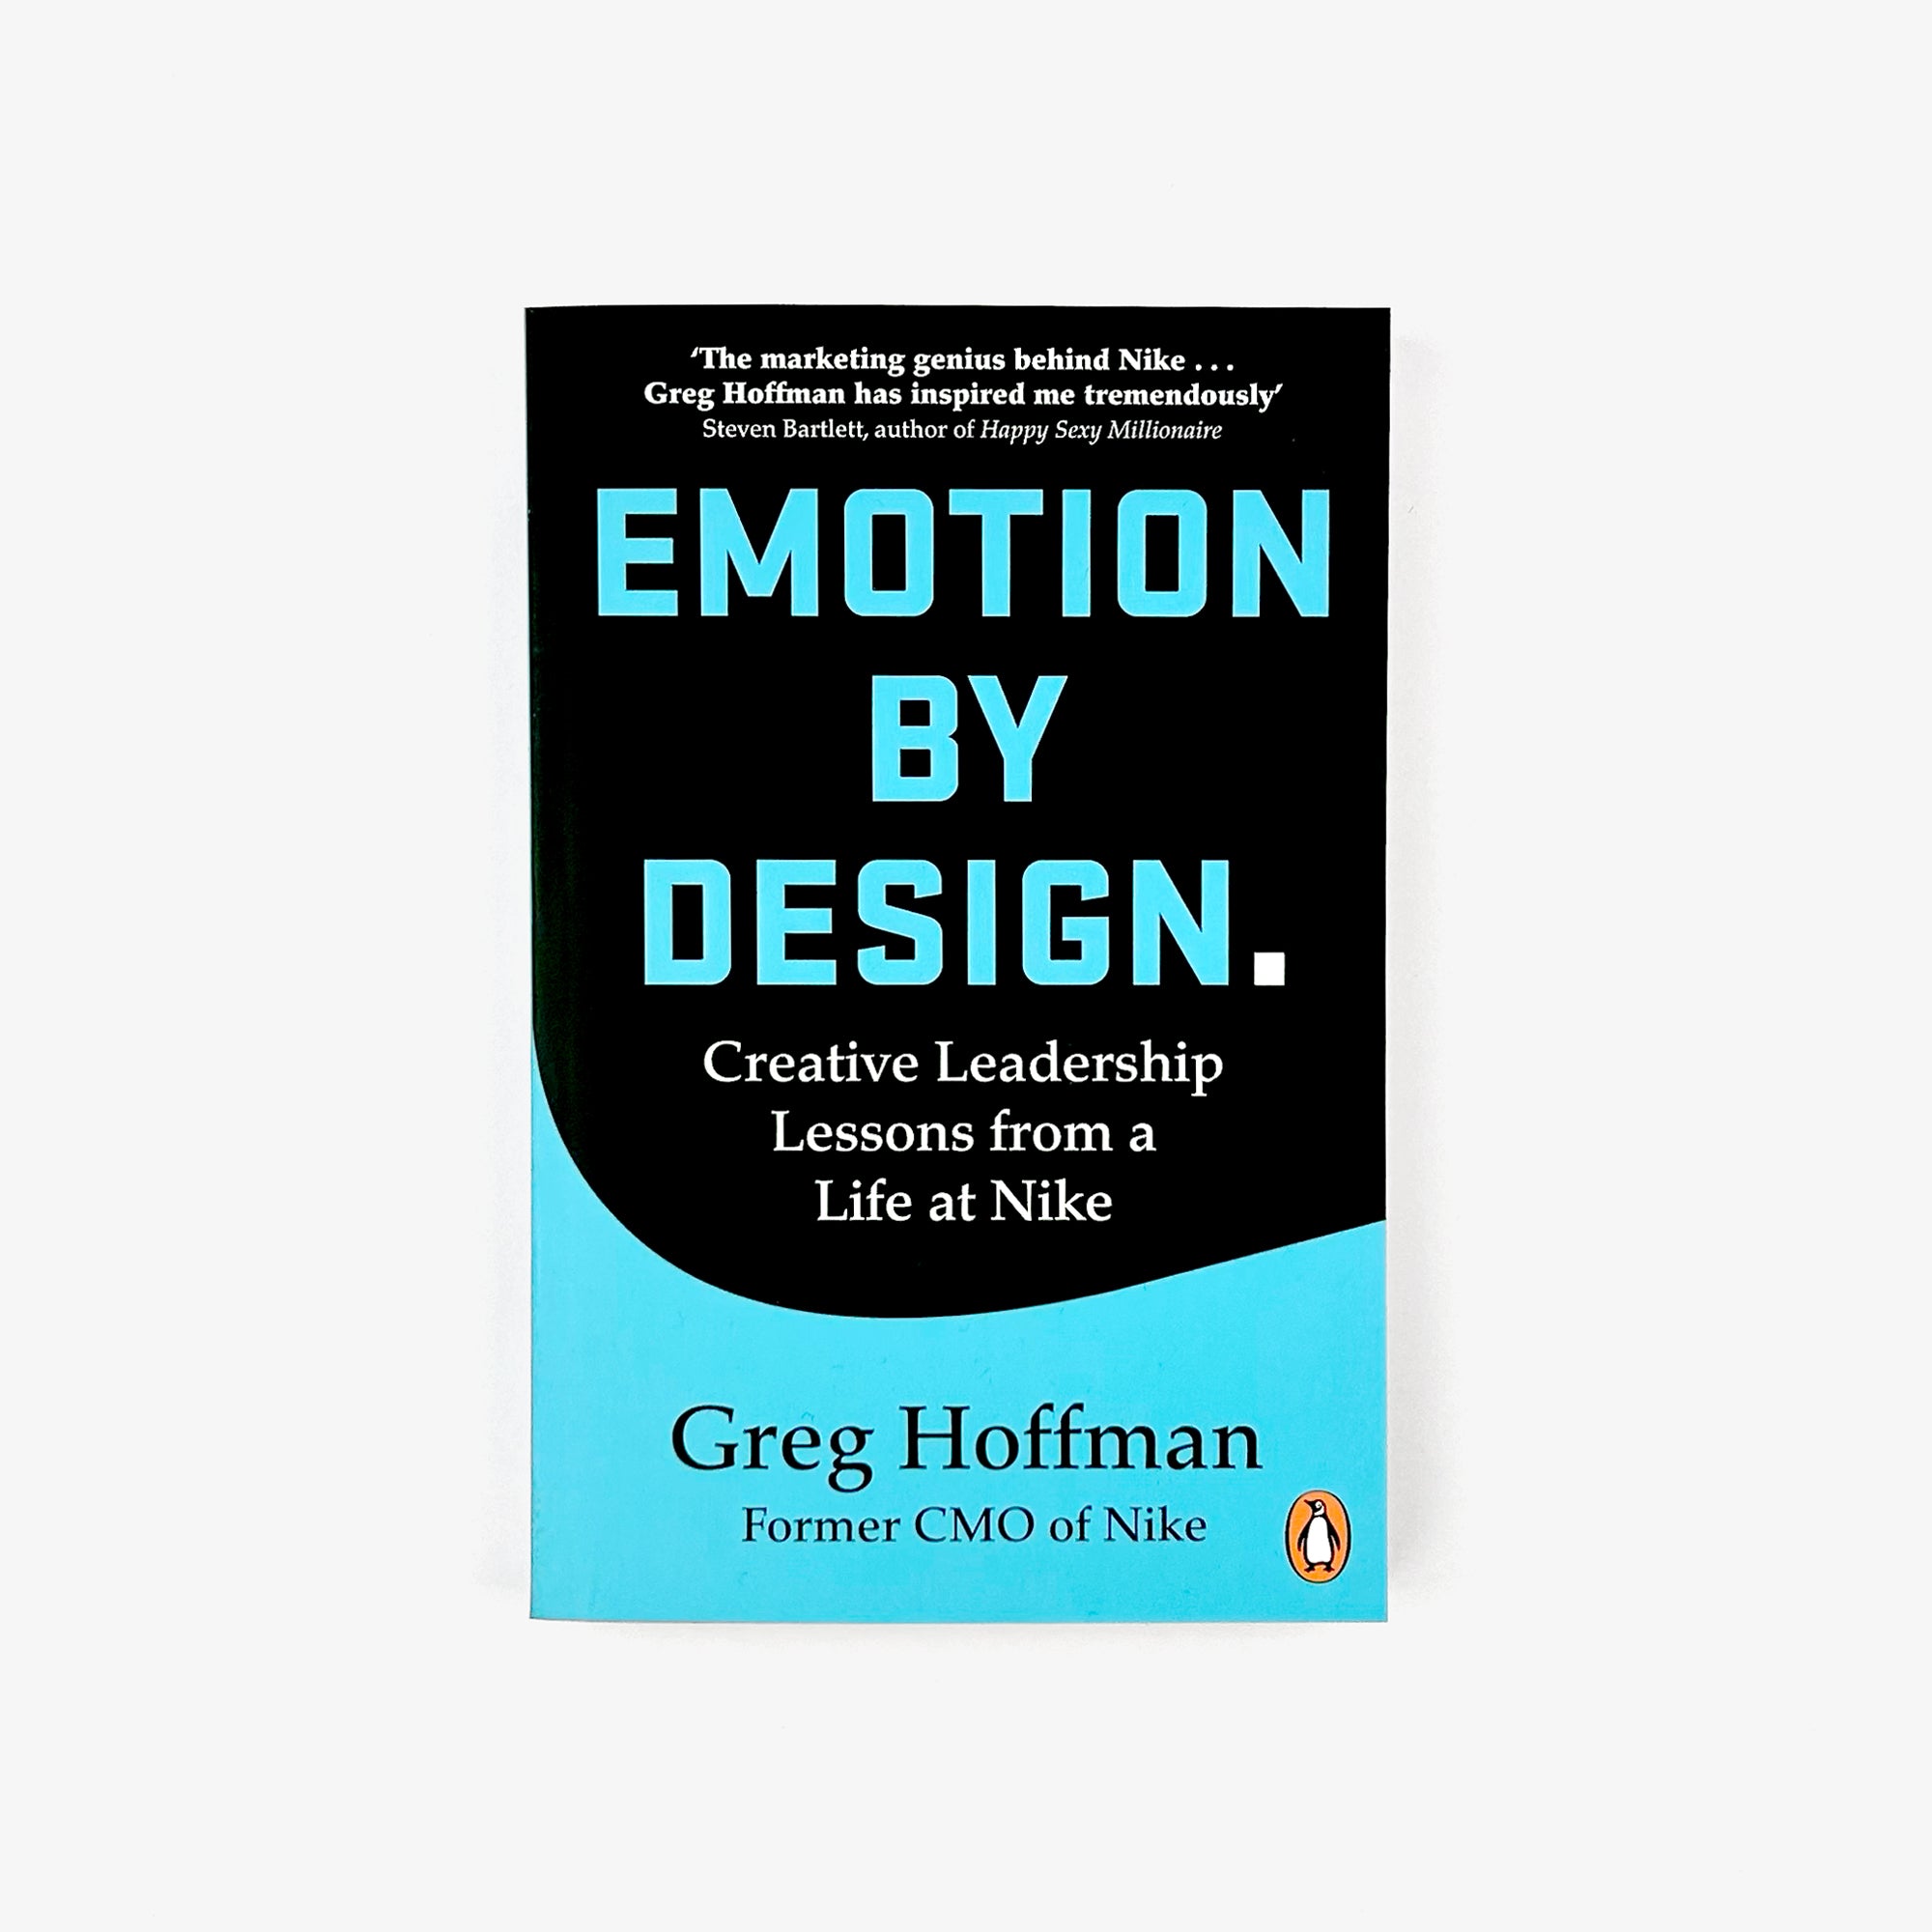 Emotion by design